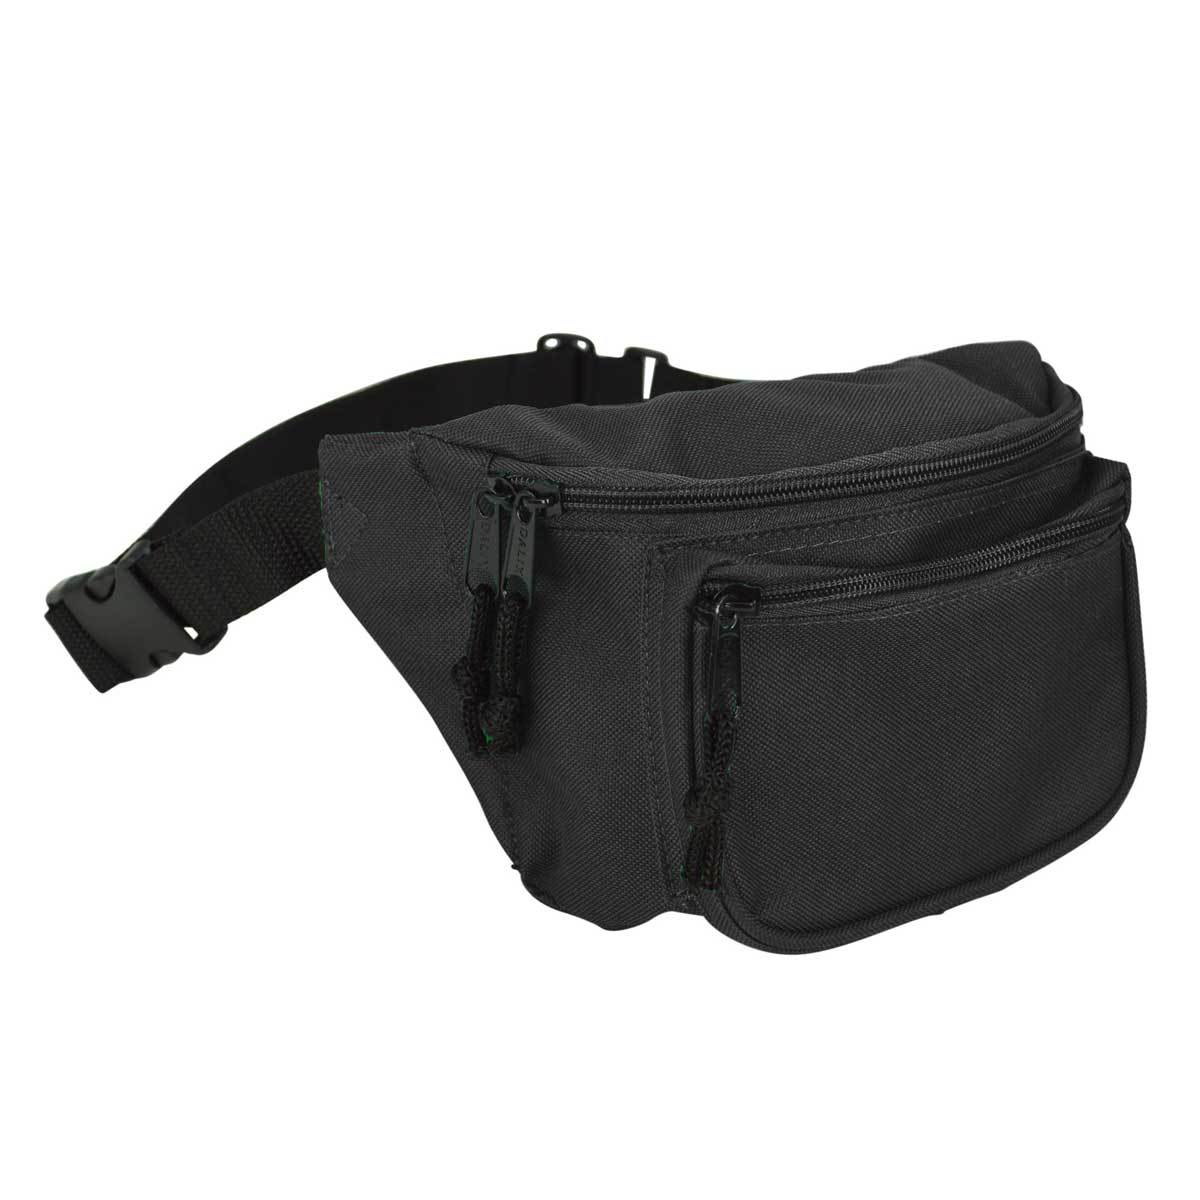 DALIX Fanny Pack 7" Travel Belt Pouch Waist Wallet Bag w/ 3 Pockets FP-002 Fanny Packs DALIX Black 